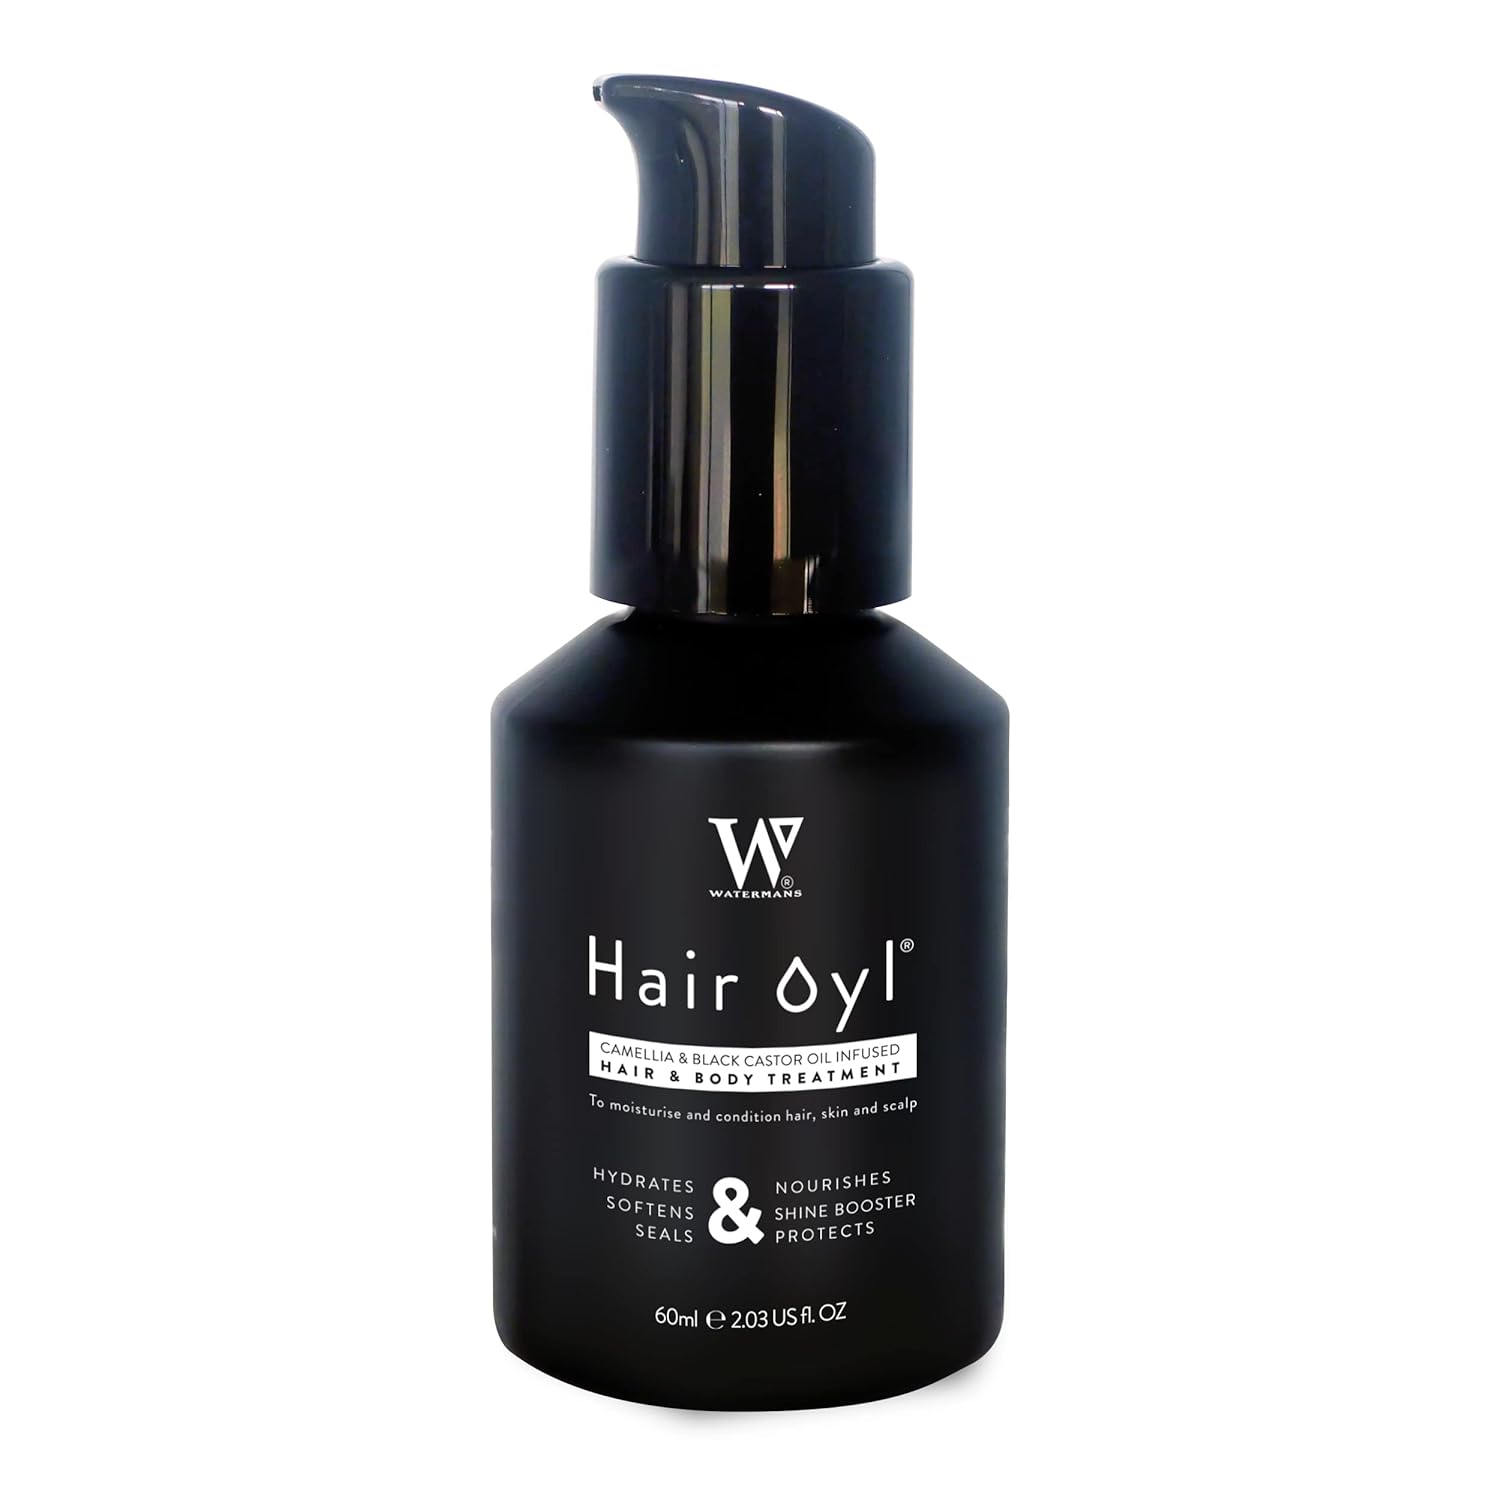 Watermans Hair Oyl 60 ml - Camellia & black castor infused hair & body oil treatment. Natural Hair Oil for dry damaged hair, Oil for frizzy hair and Curly hair